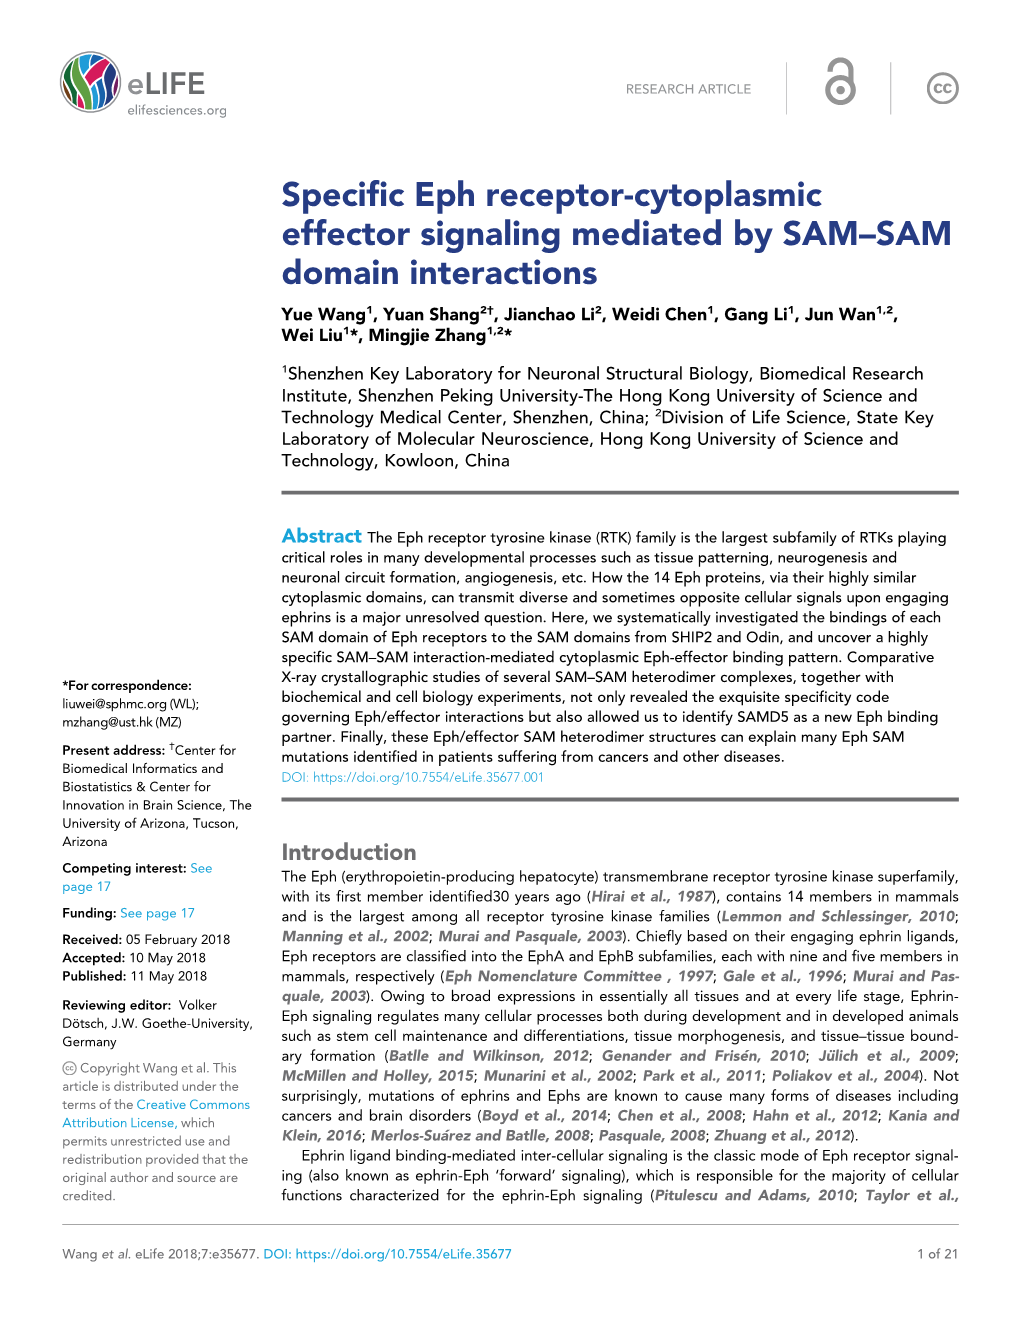 Specific Eph Receptor-Cytoplasmic Effector Signaling